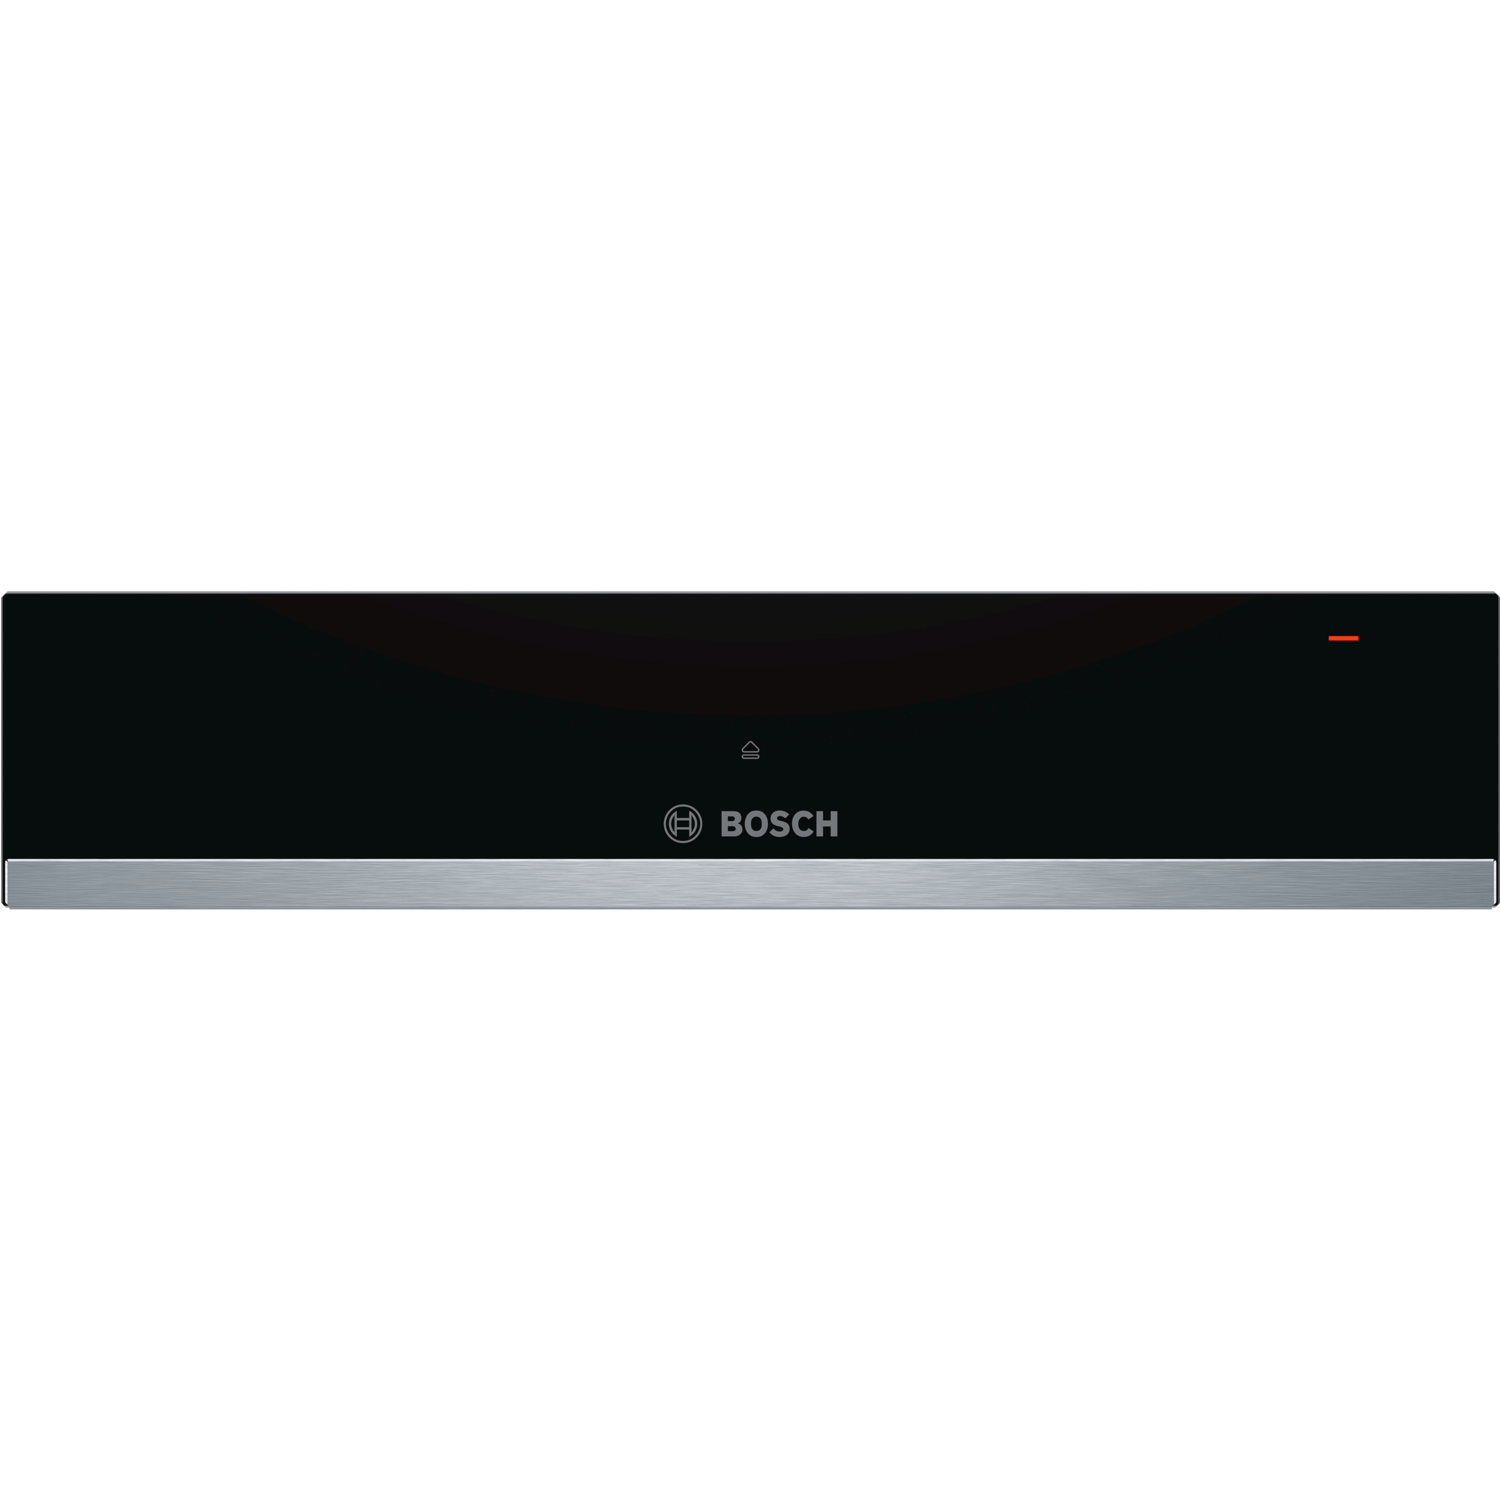 Bosch 14cm High Warming Drawer - Stainless Steel